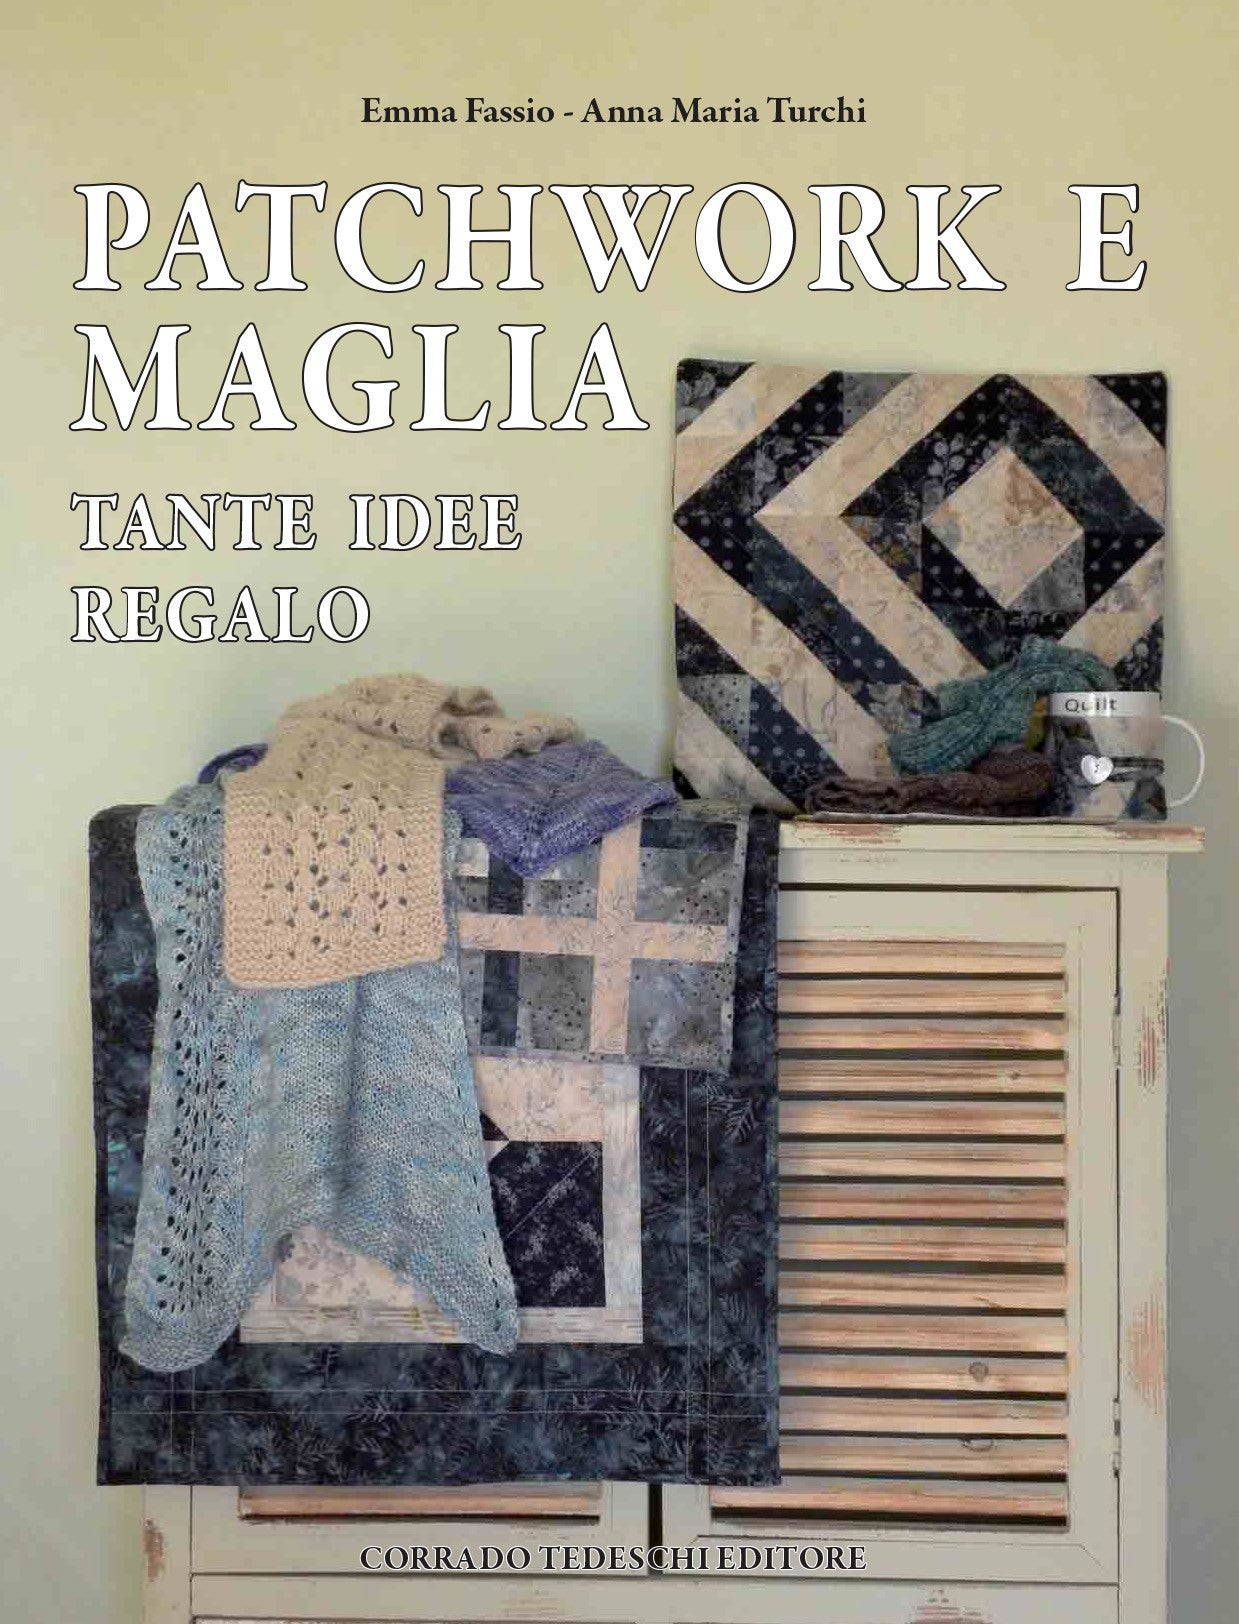 Patchwork e Maglia Anna Maria Turchi ed Emma Fassio